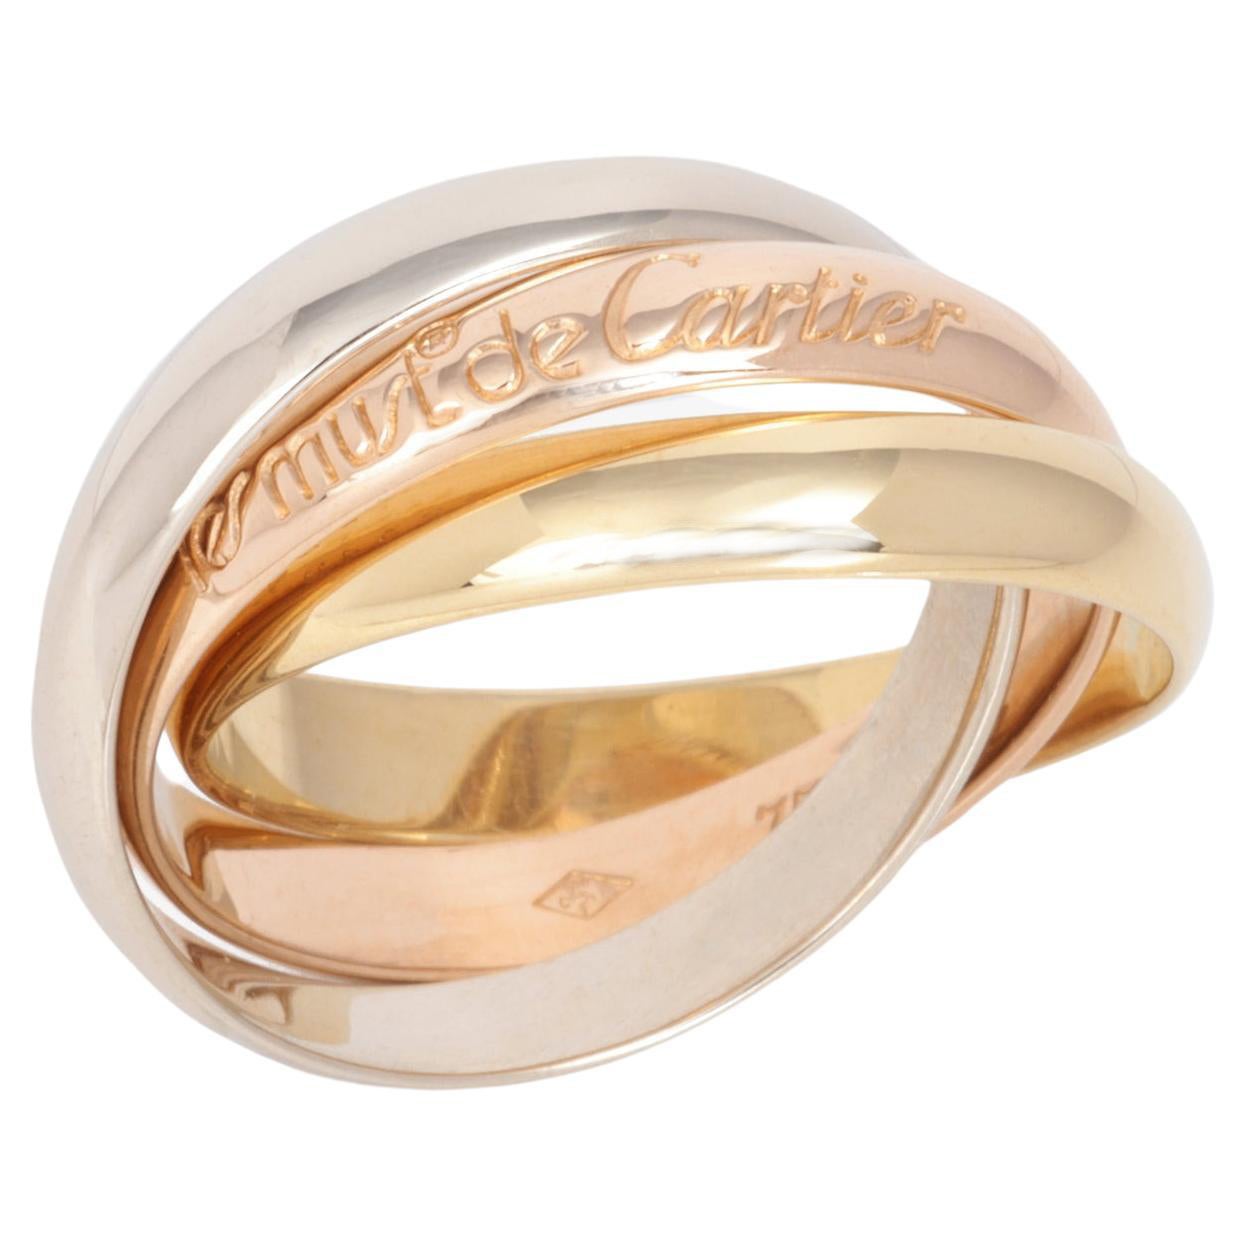 Cartier 18ct Weiß, Gelb und Rose Gold Medium Les Must de Cartier Ring